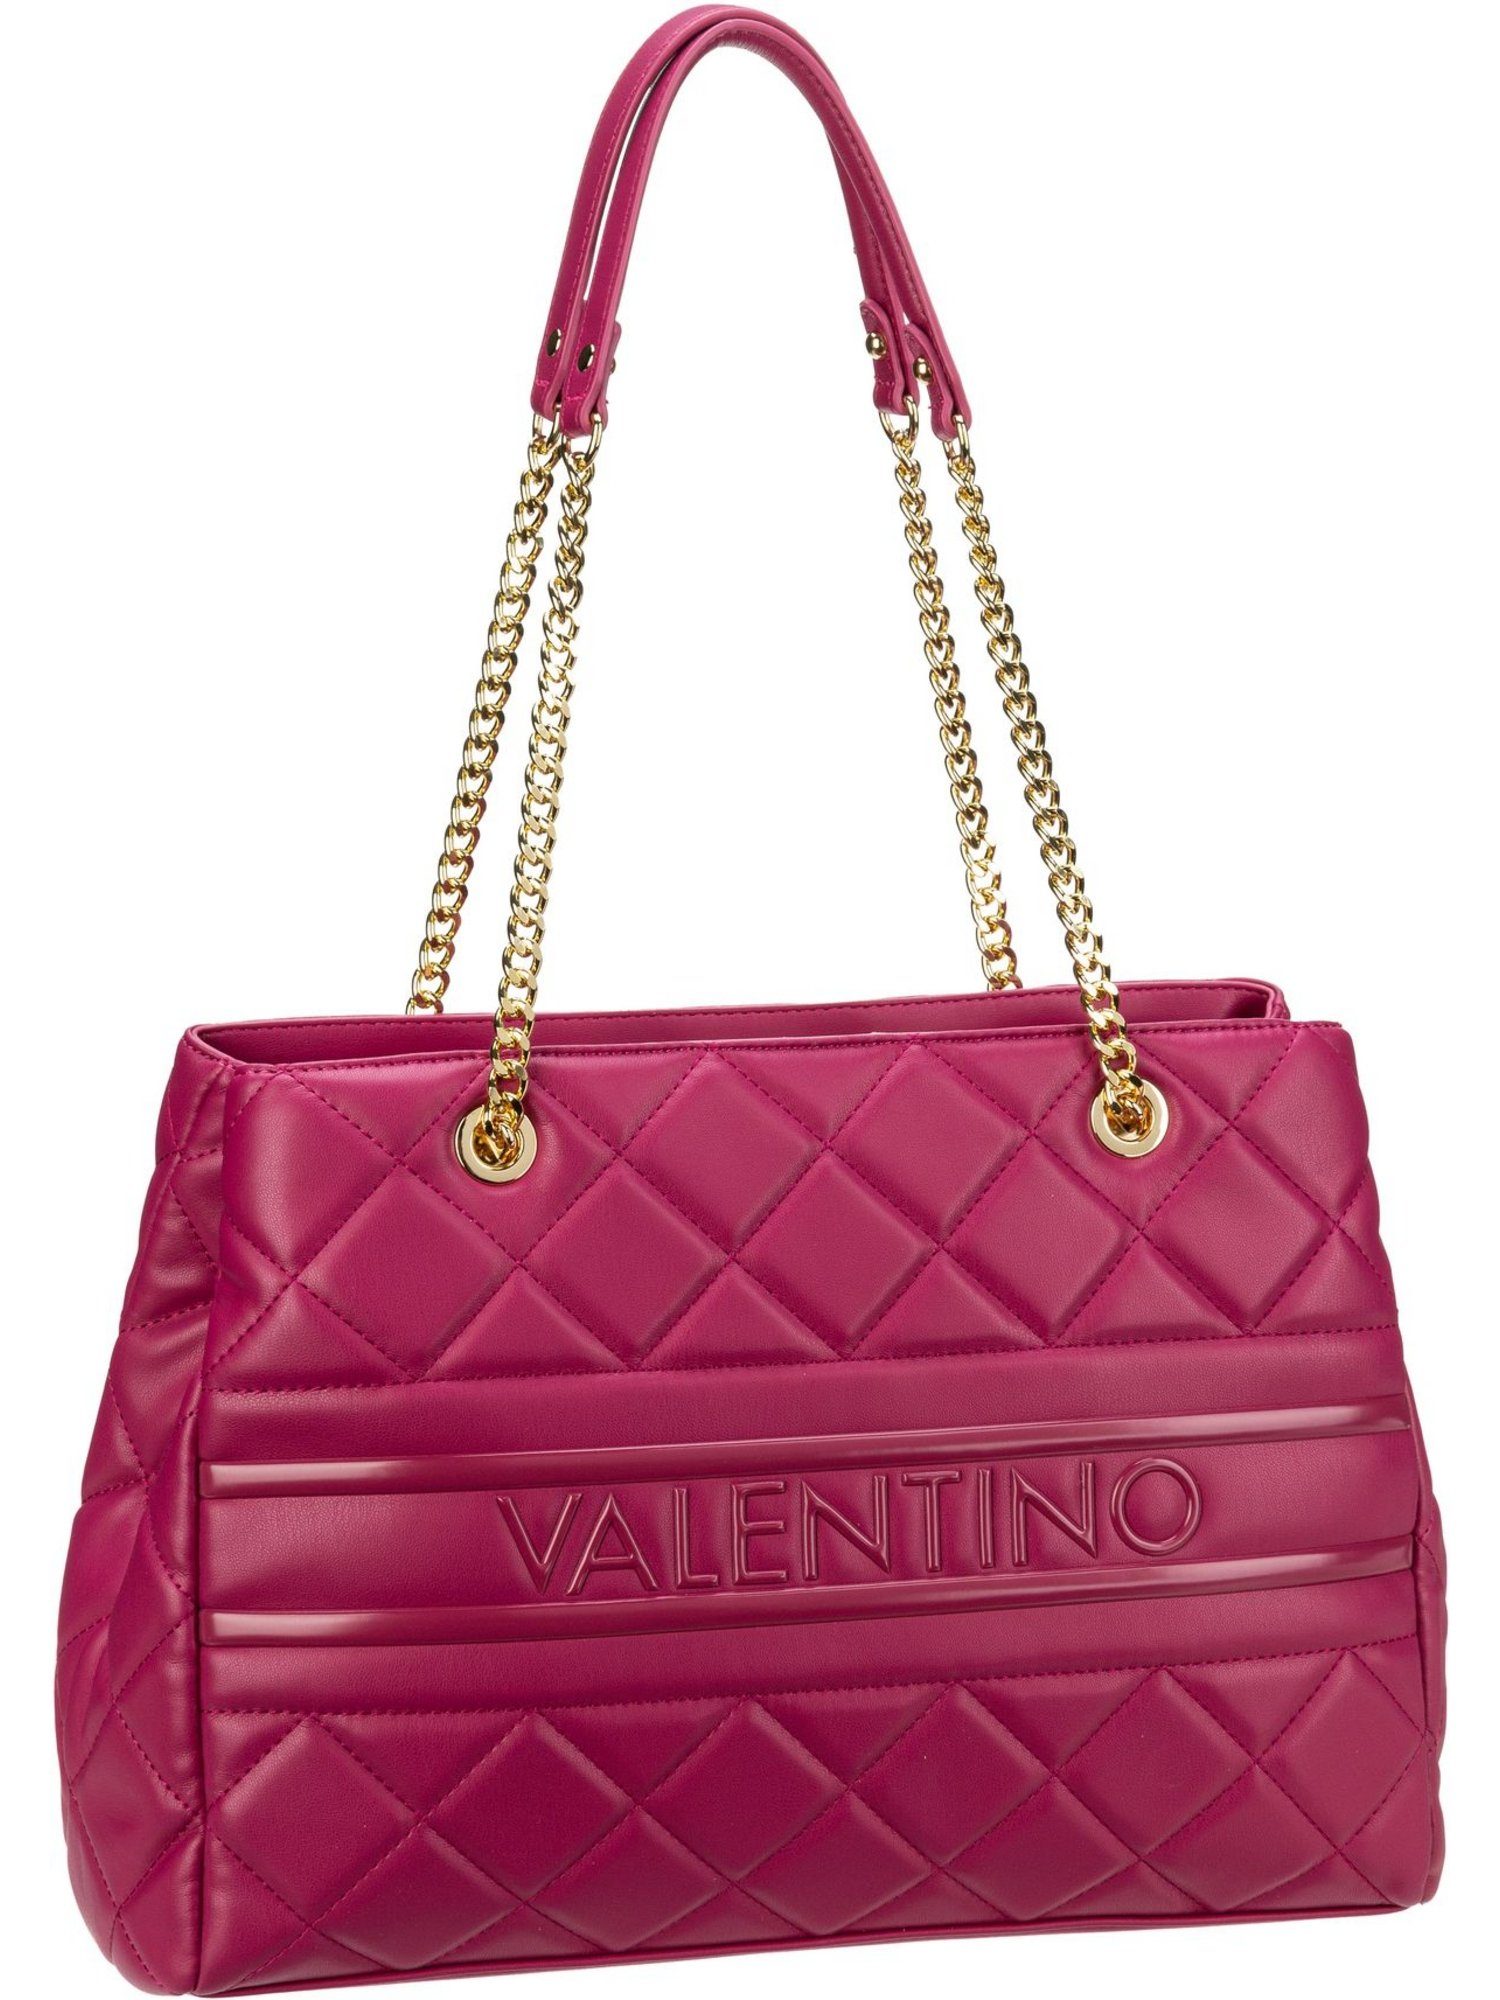 VALENTINO BAGS Handtasche Ada Tote O04, Shoulder Bag Malva